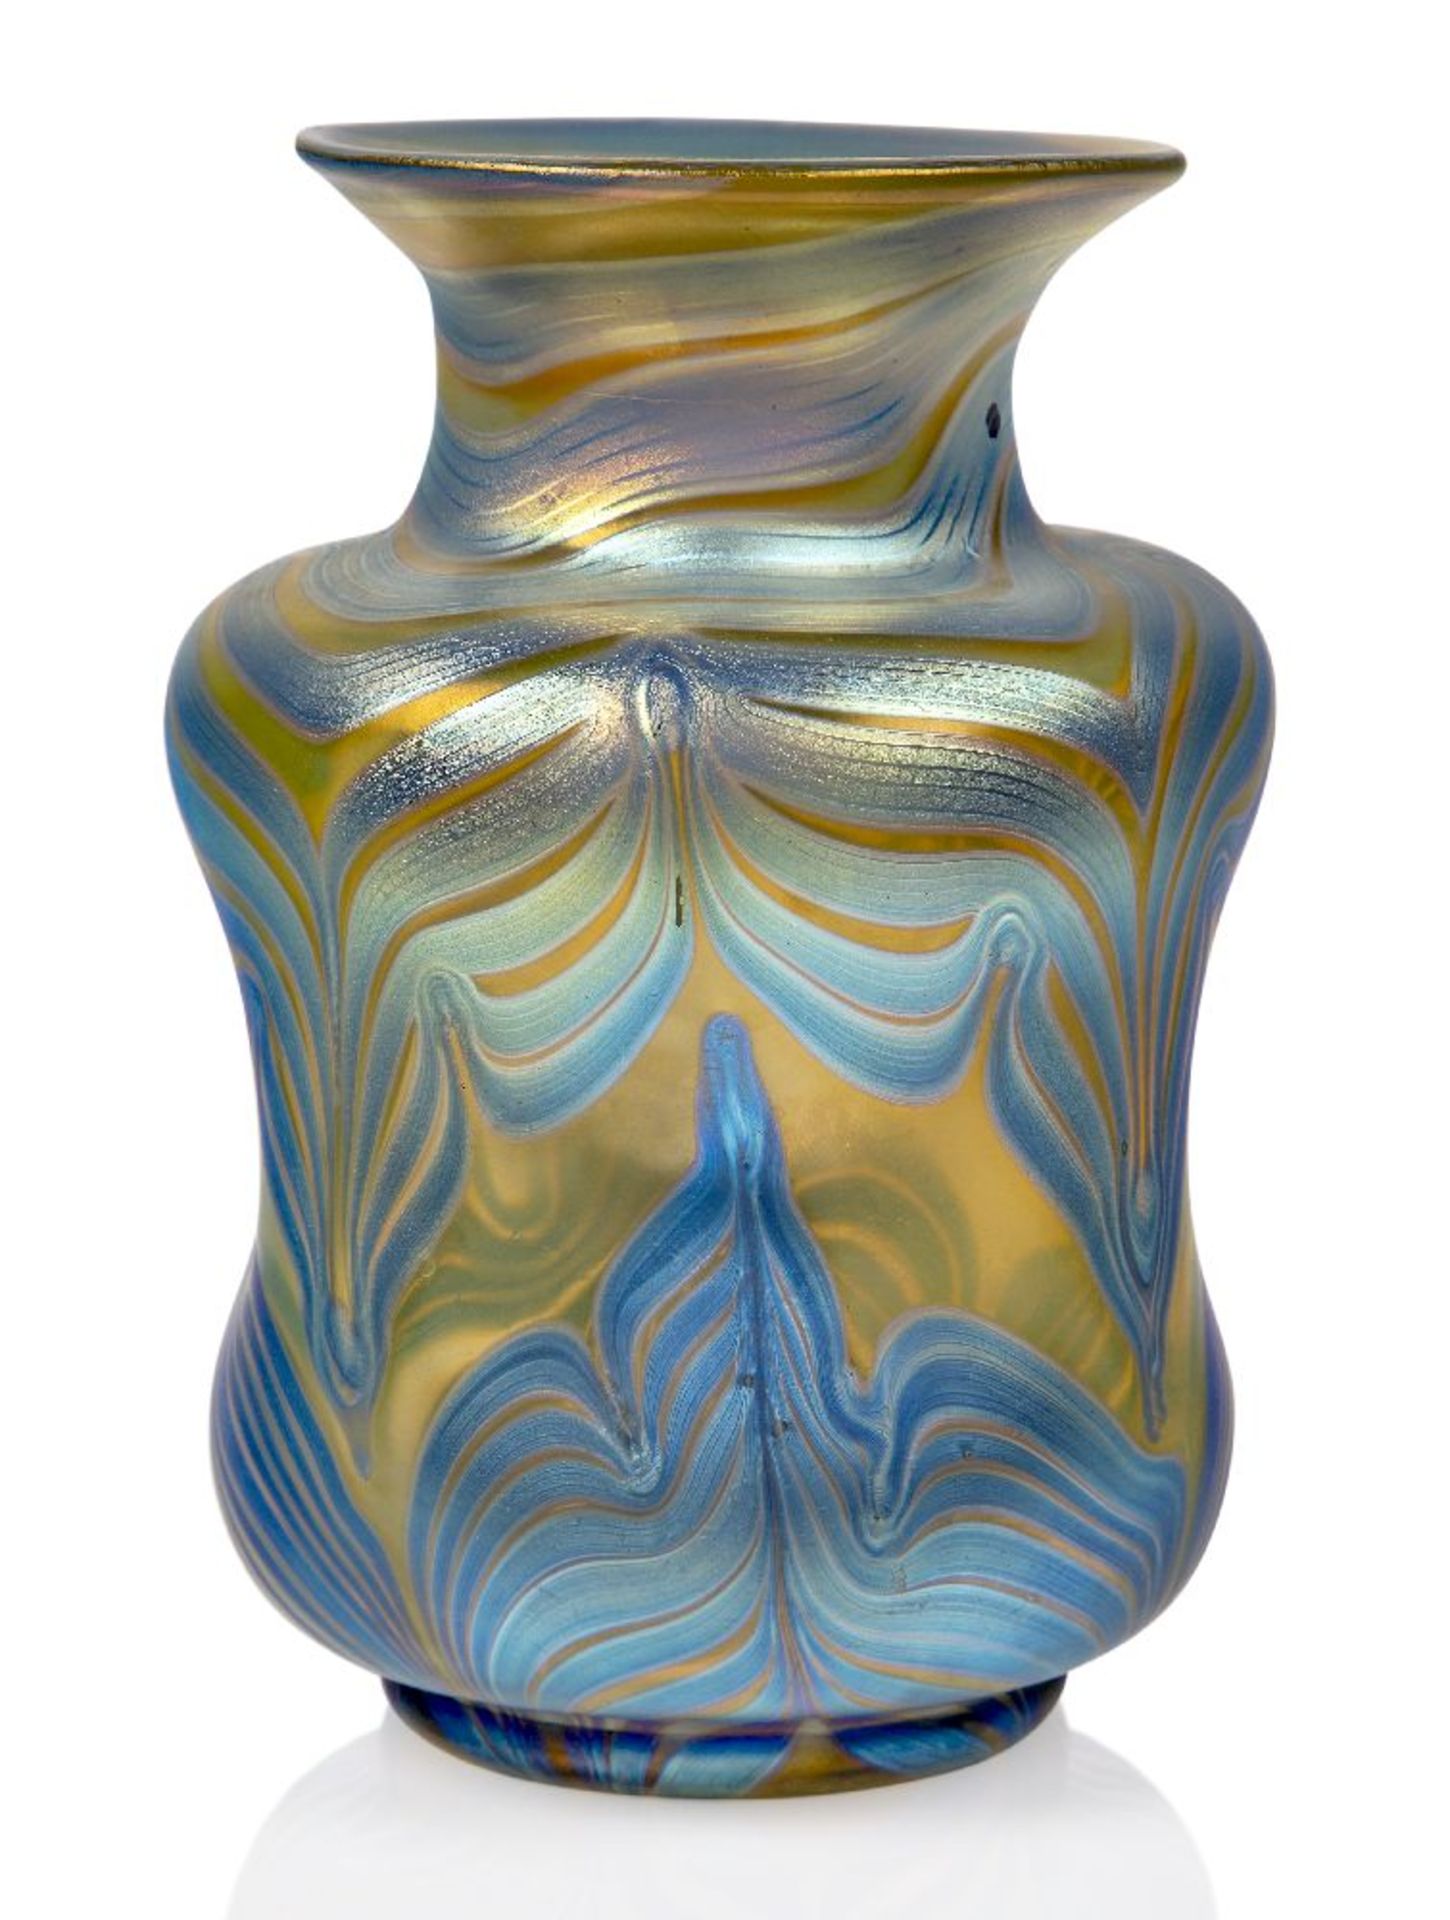 Loetz (Austrian), an iridescent Phaenomen dimpled glass vase with everted rim, c.1900, PG 202, PN